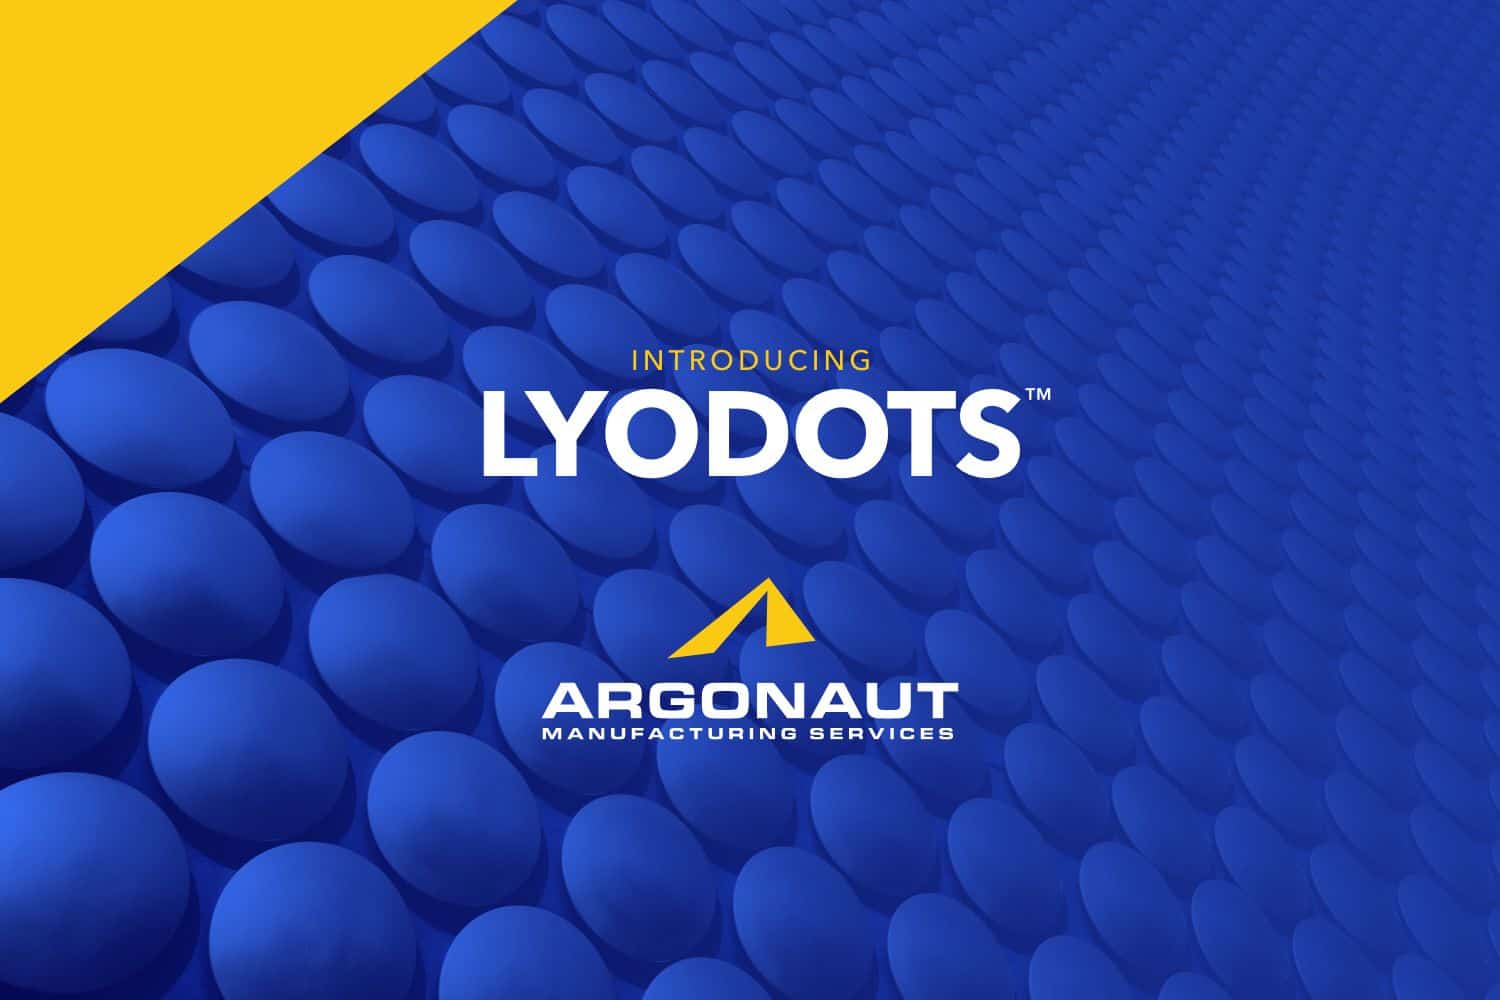 launch of LyoDots